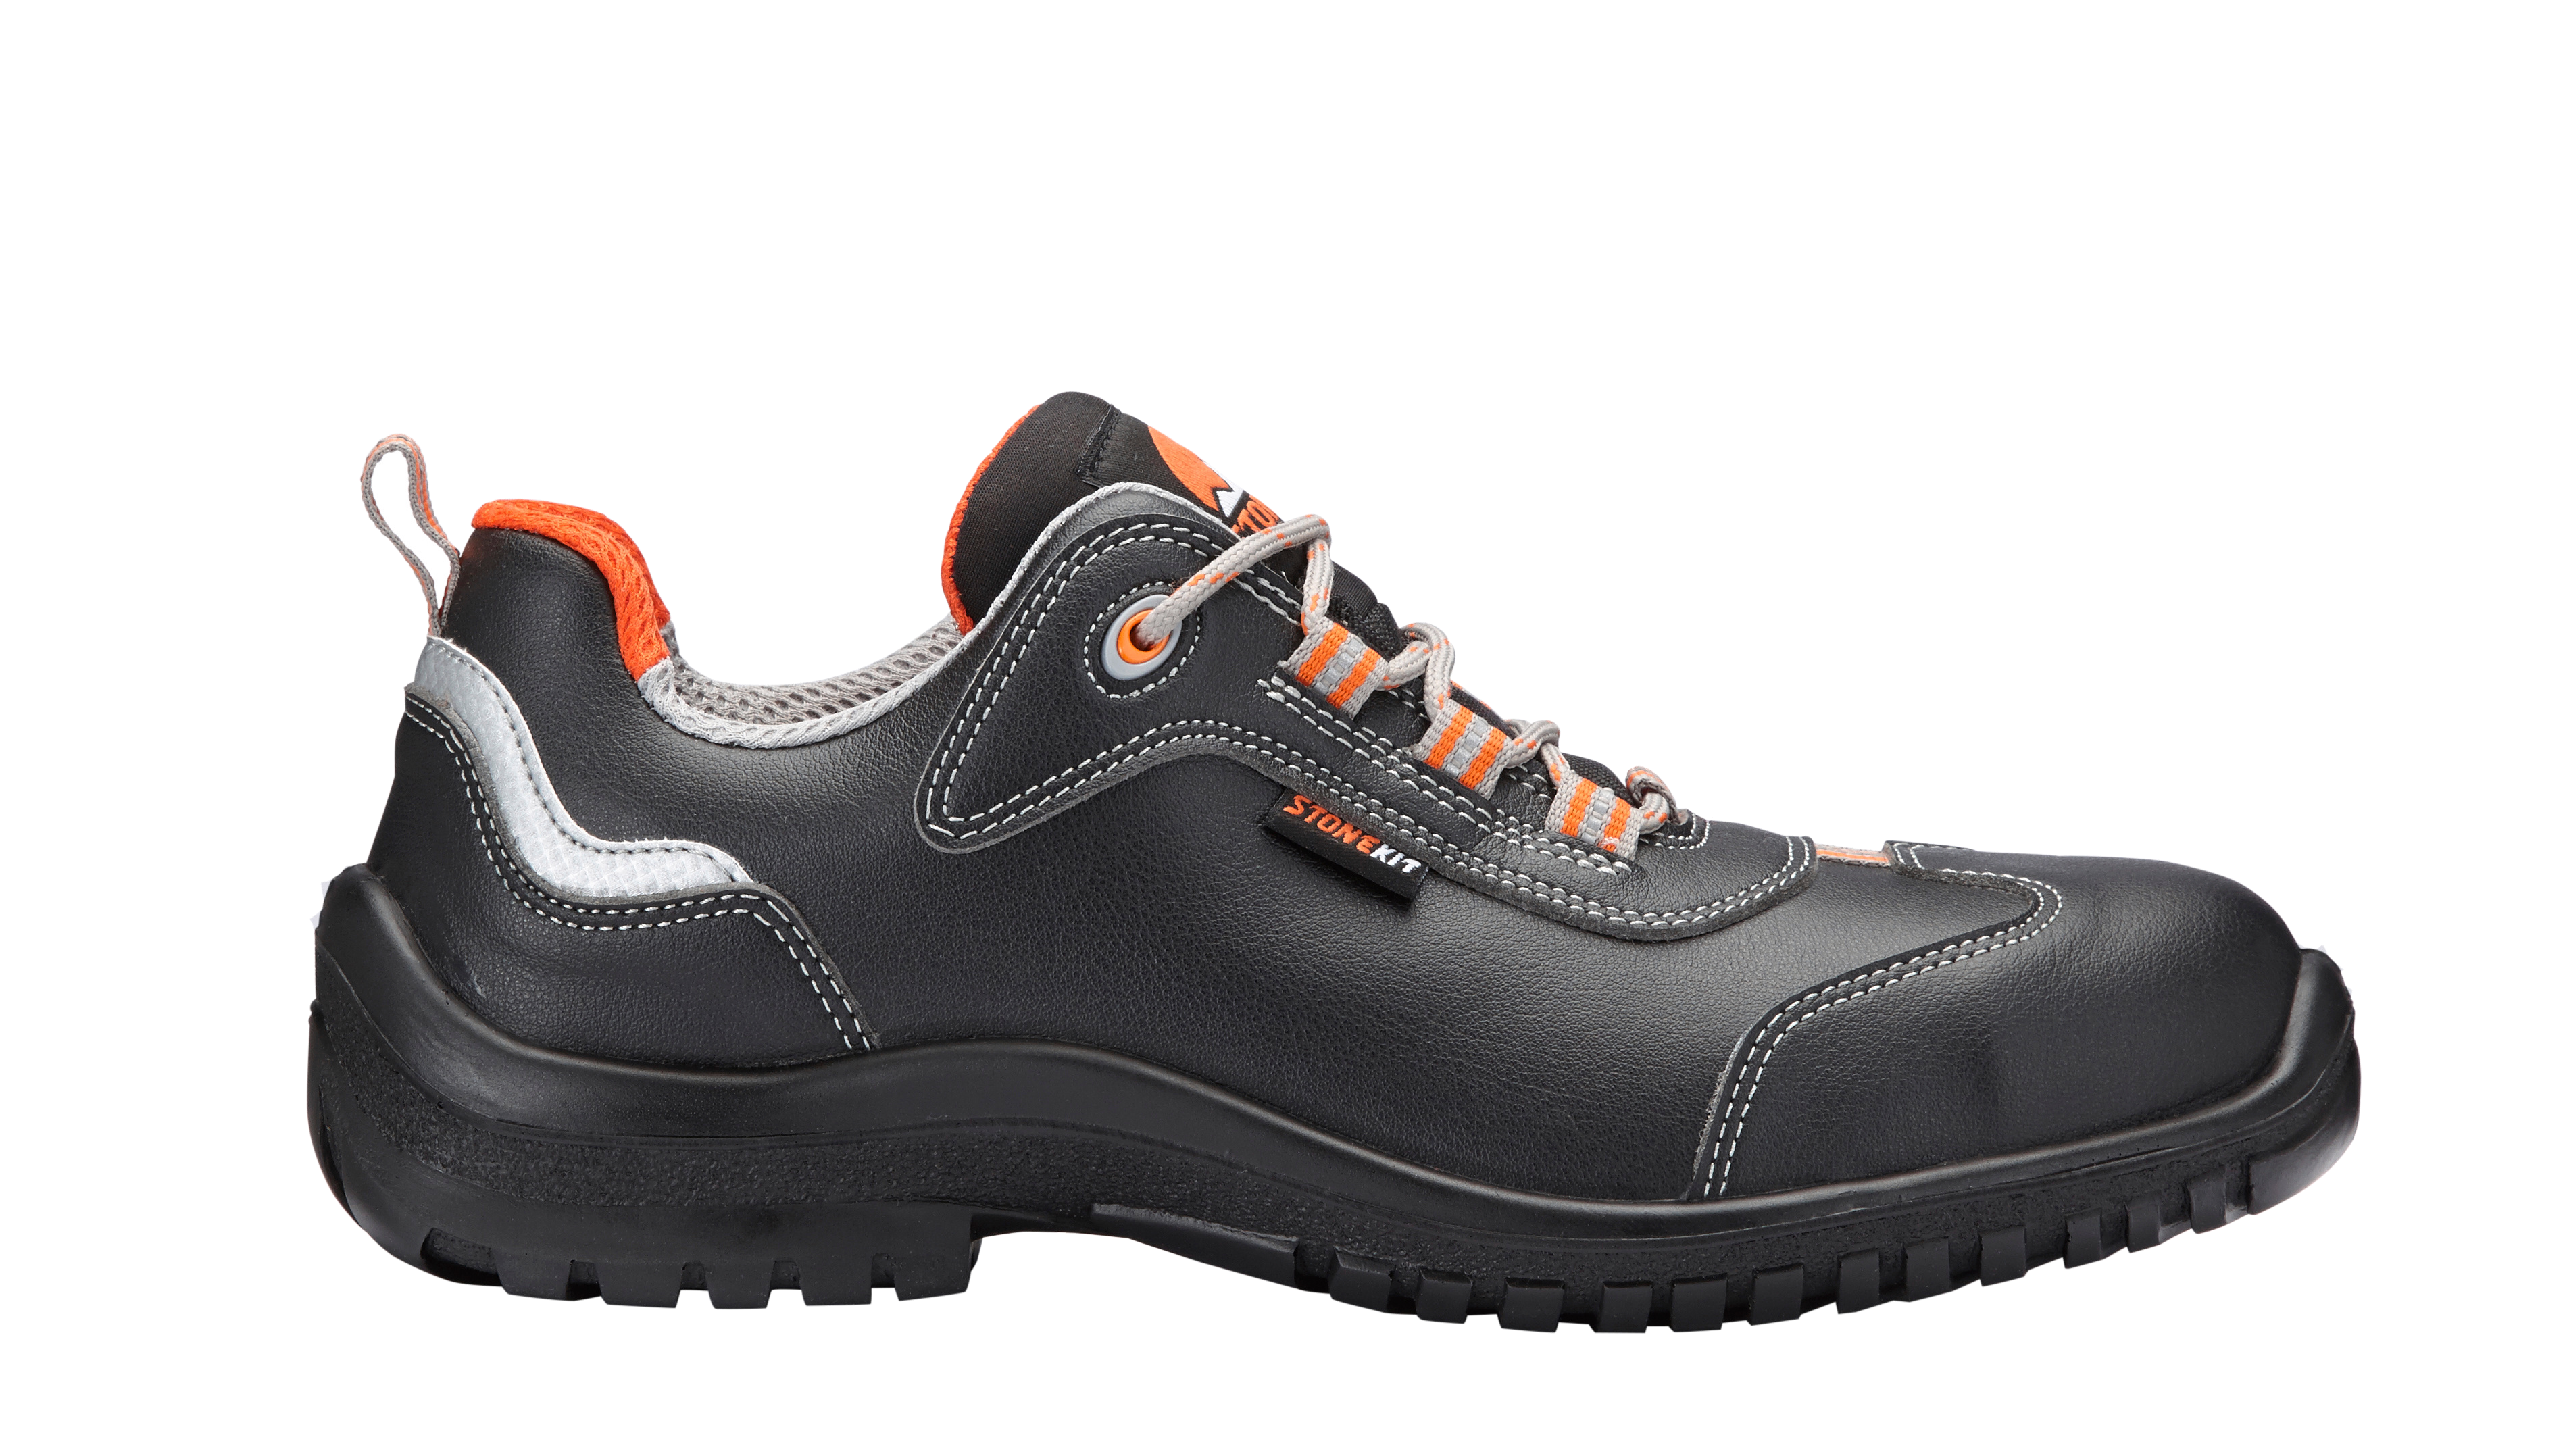 S3: STONEKIT S3 Safety shoes Luke + black/orange